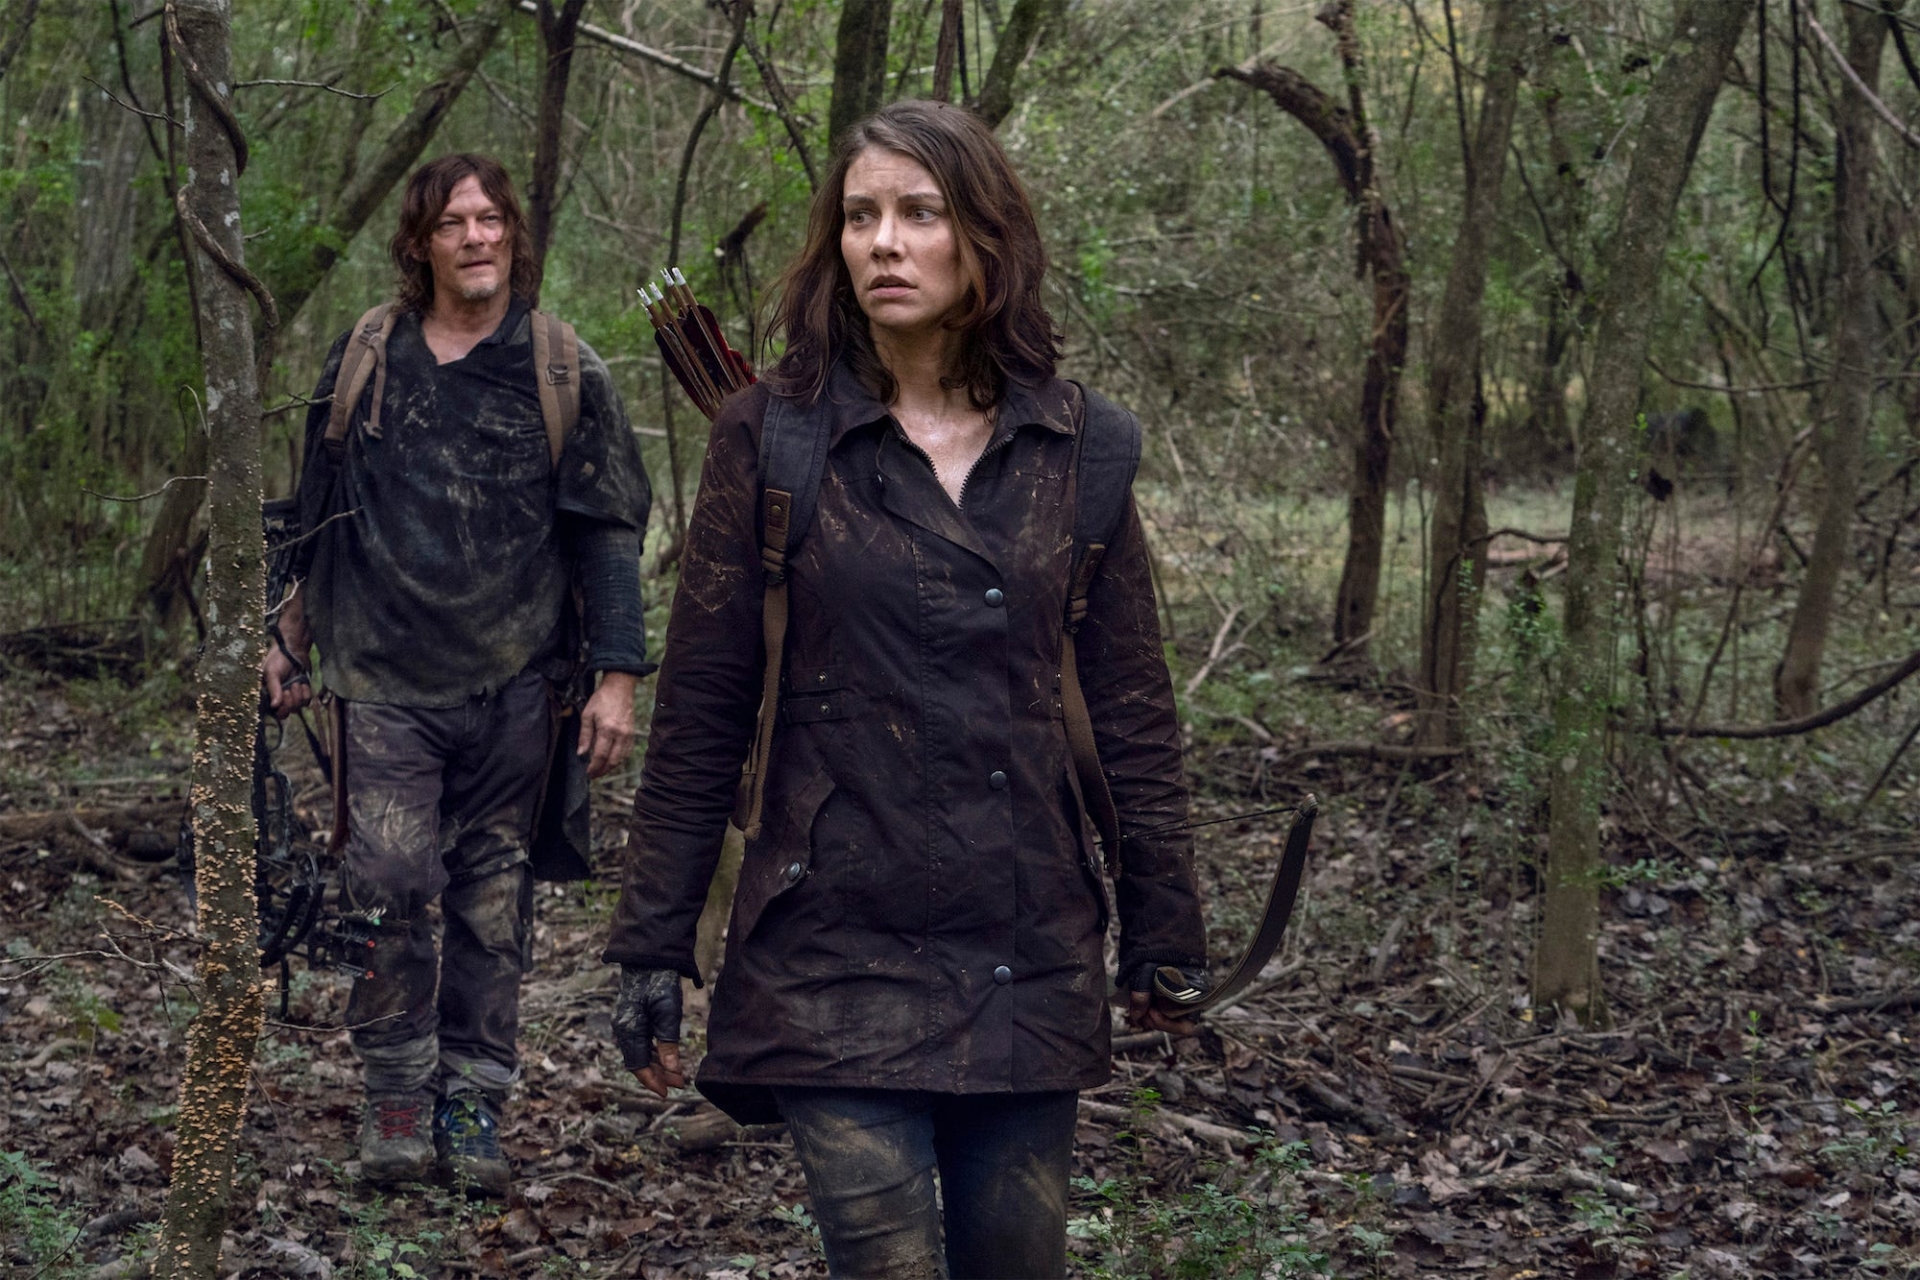 The Walking Dead season 10 Return: Schedule, How to Watch, Online, TV Stream, Date of New Episodes